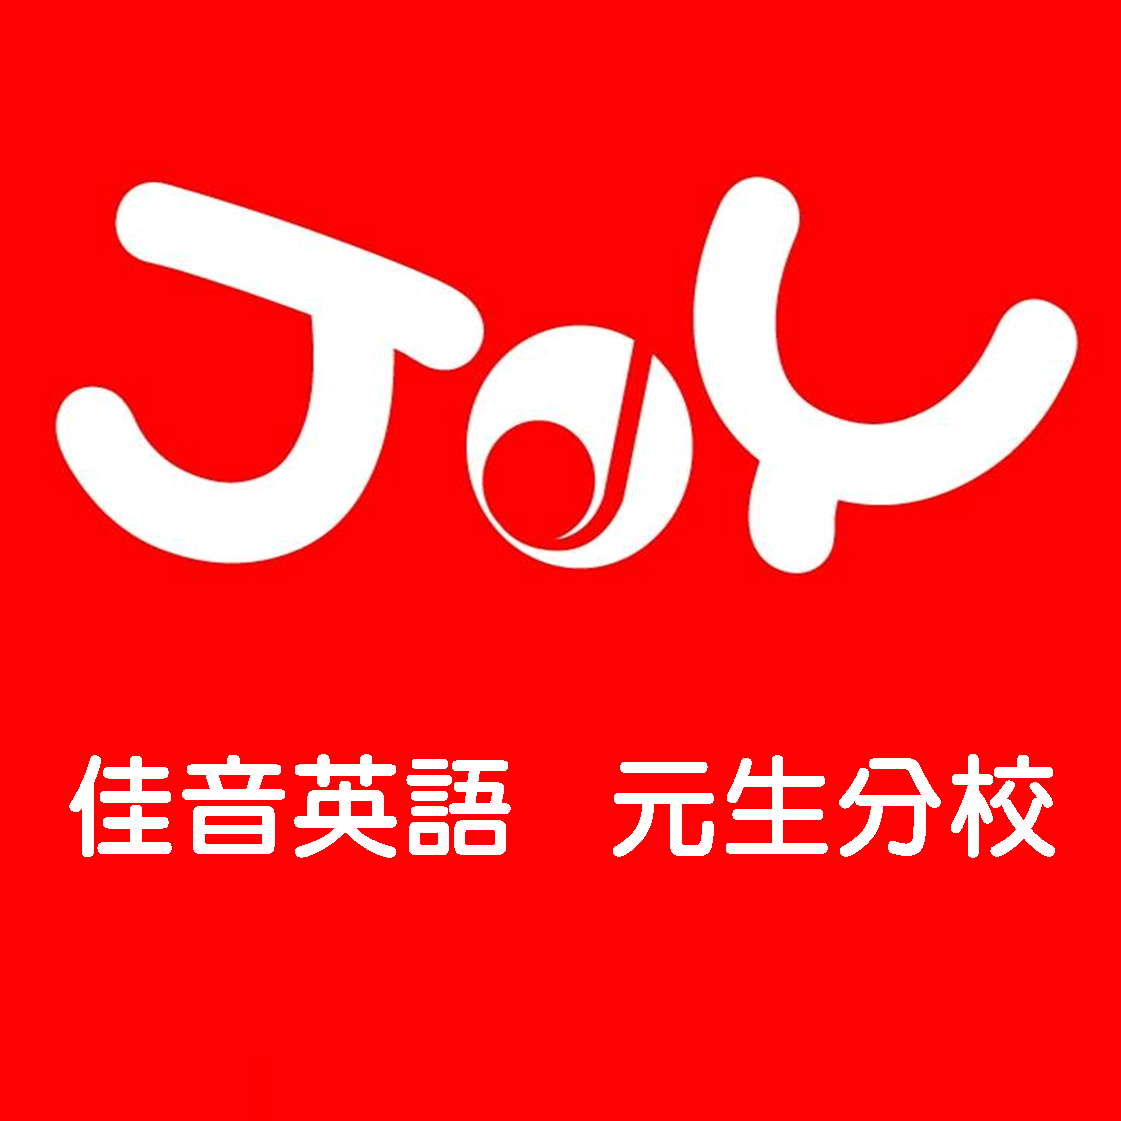 Teaching English and Living in Taiwan Jobs Available 教學工作, JE school-YuanSheng branch Seeking Full-Time Teachers. image